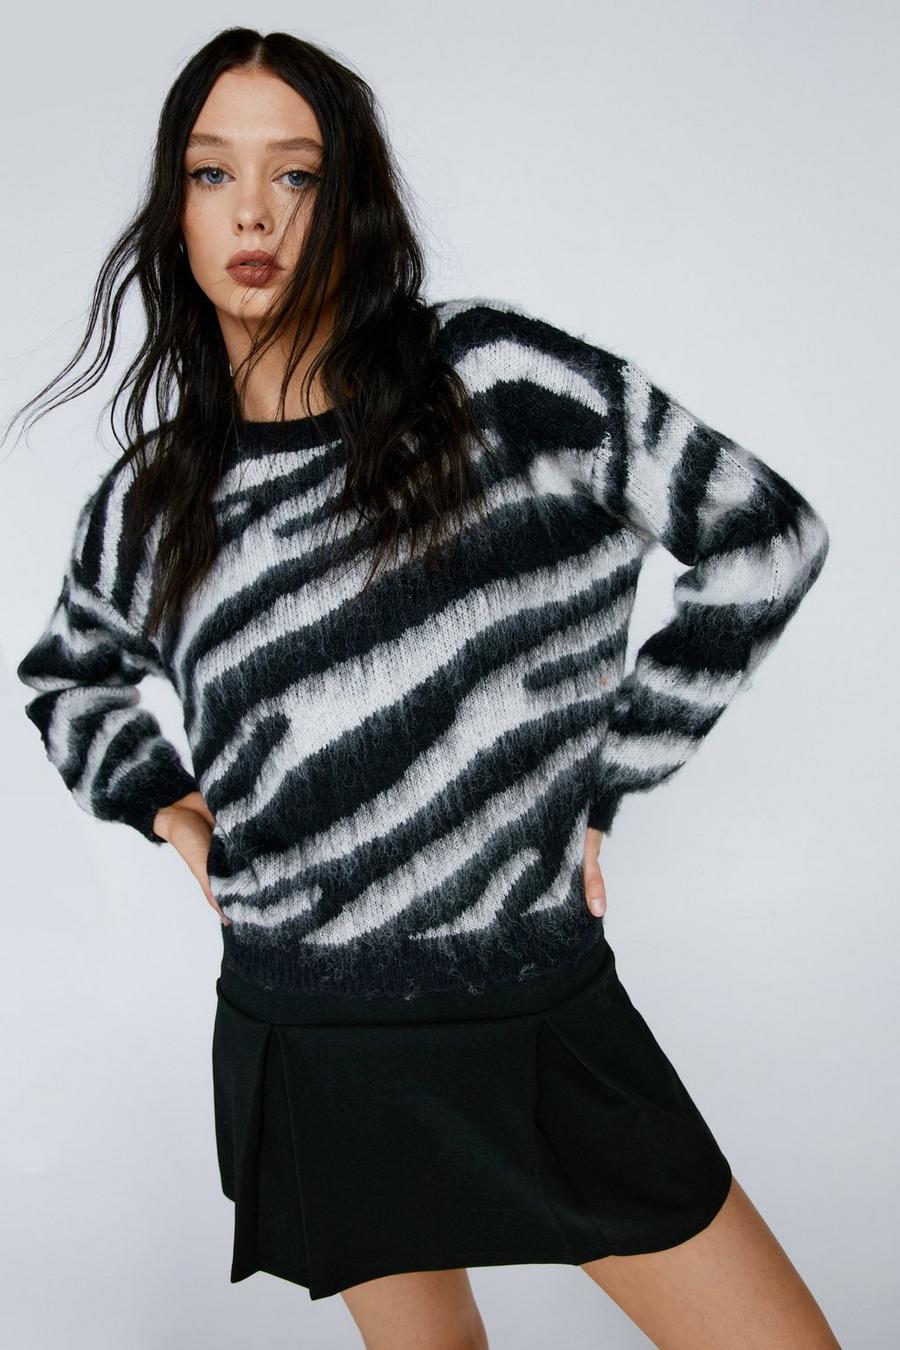 Zebra Oversized Sweater